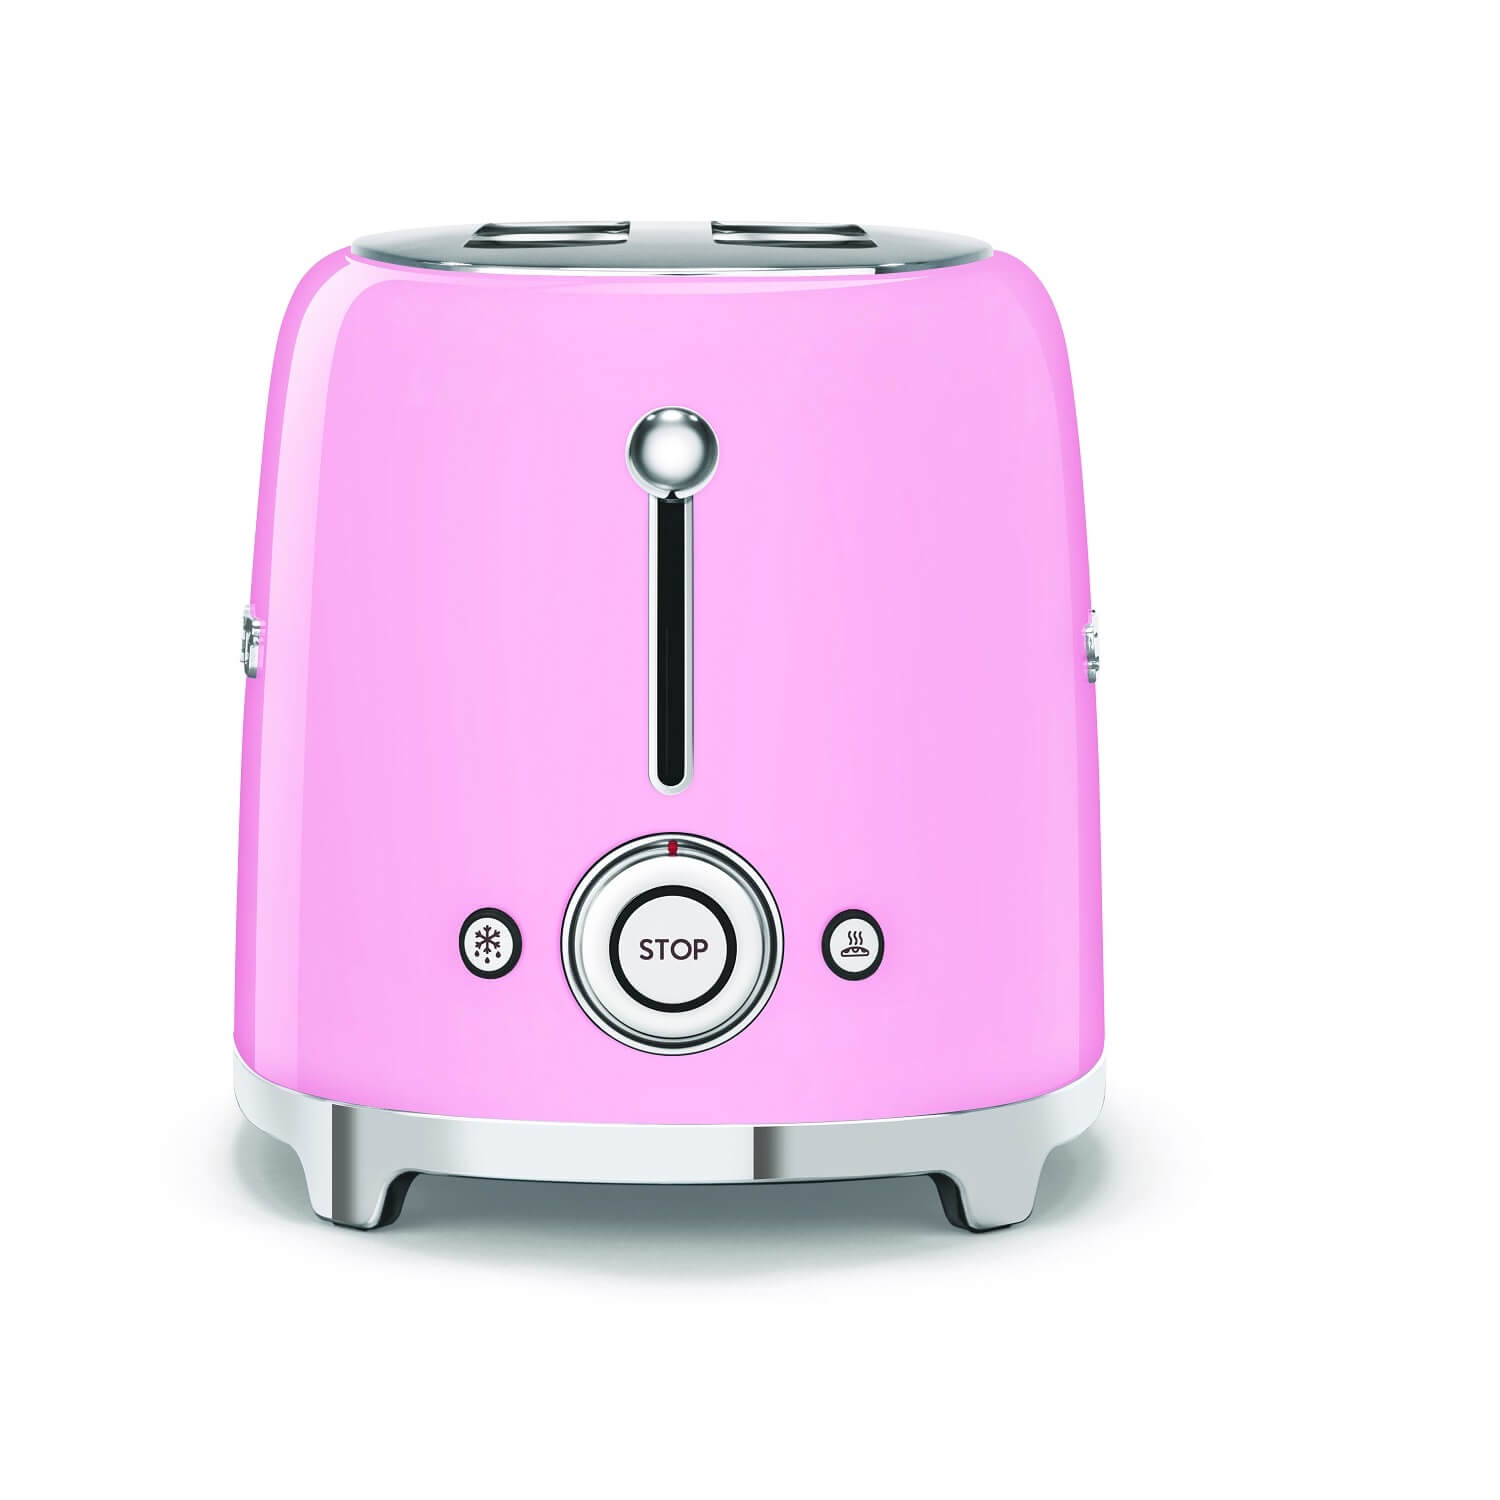 SMEG 50's Style 2 Slice Toaster - Pink Color